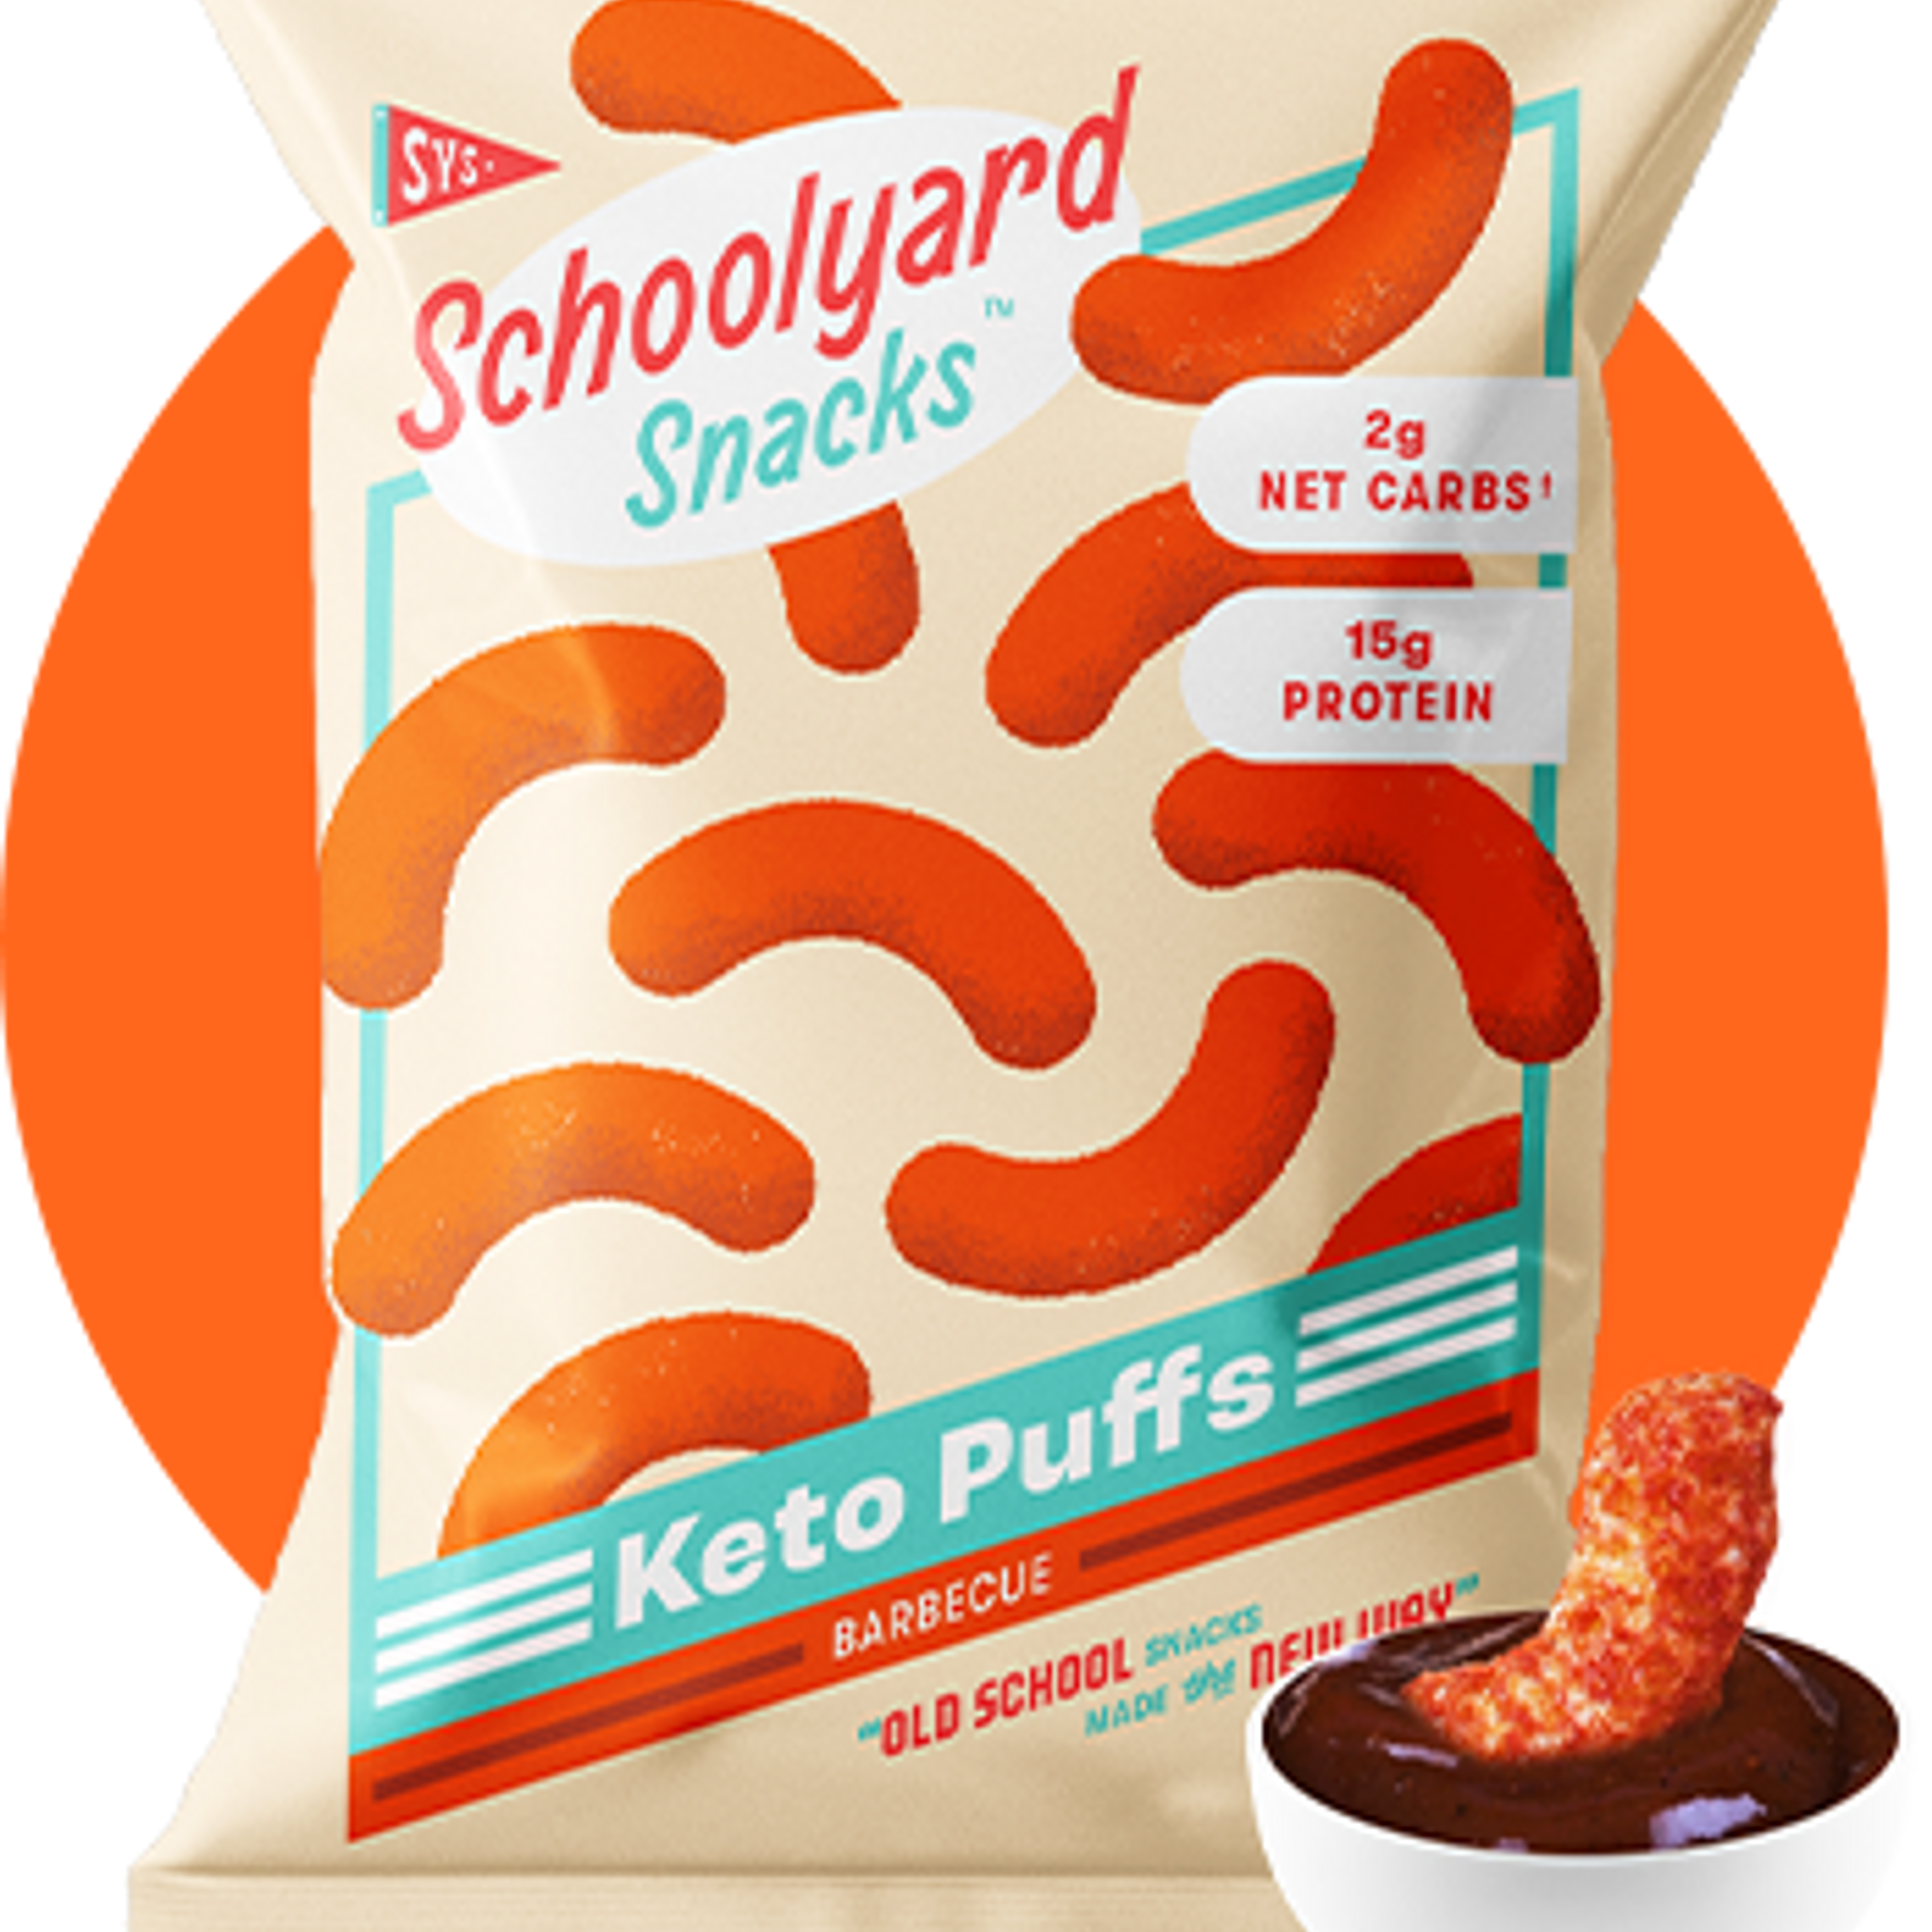 www.schoolyardsnacks.com/products/keto-puffs-growltv